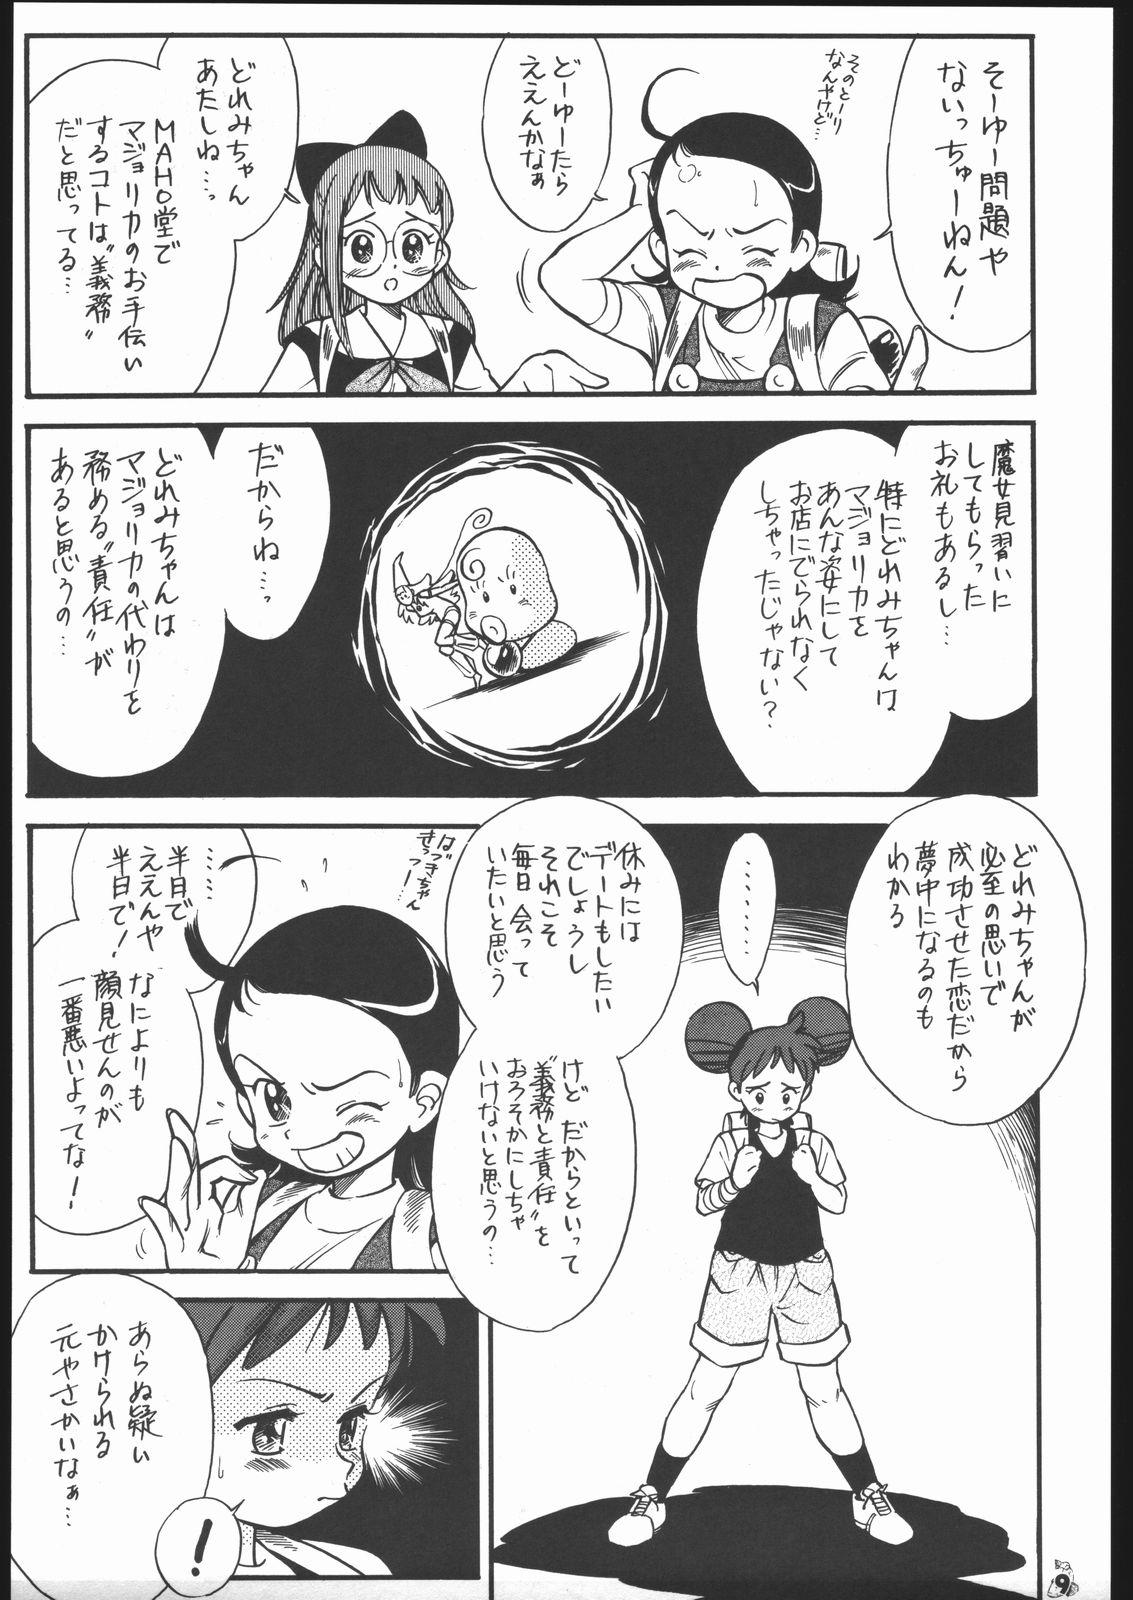 Gayfuck Oudou - Sakura taisen Ojamajo doremi Virtua fighter Desperate - Page 8